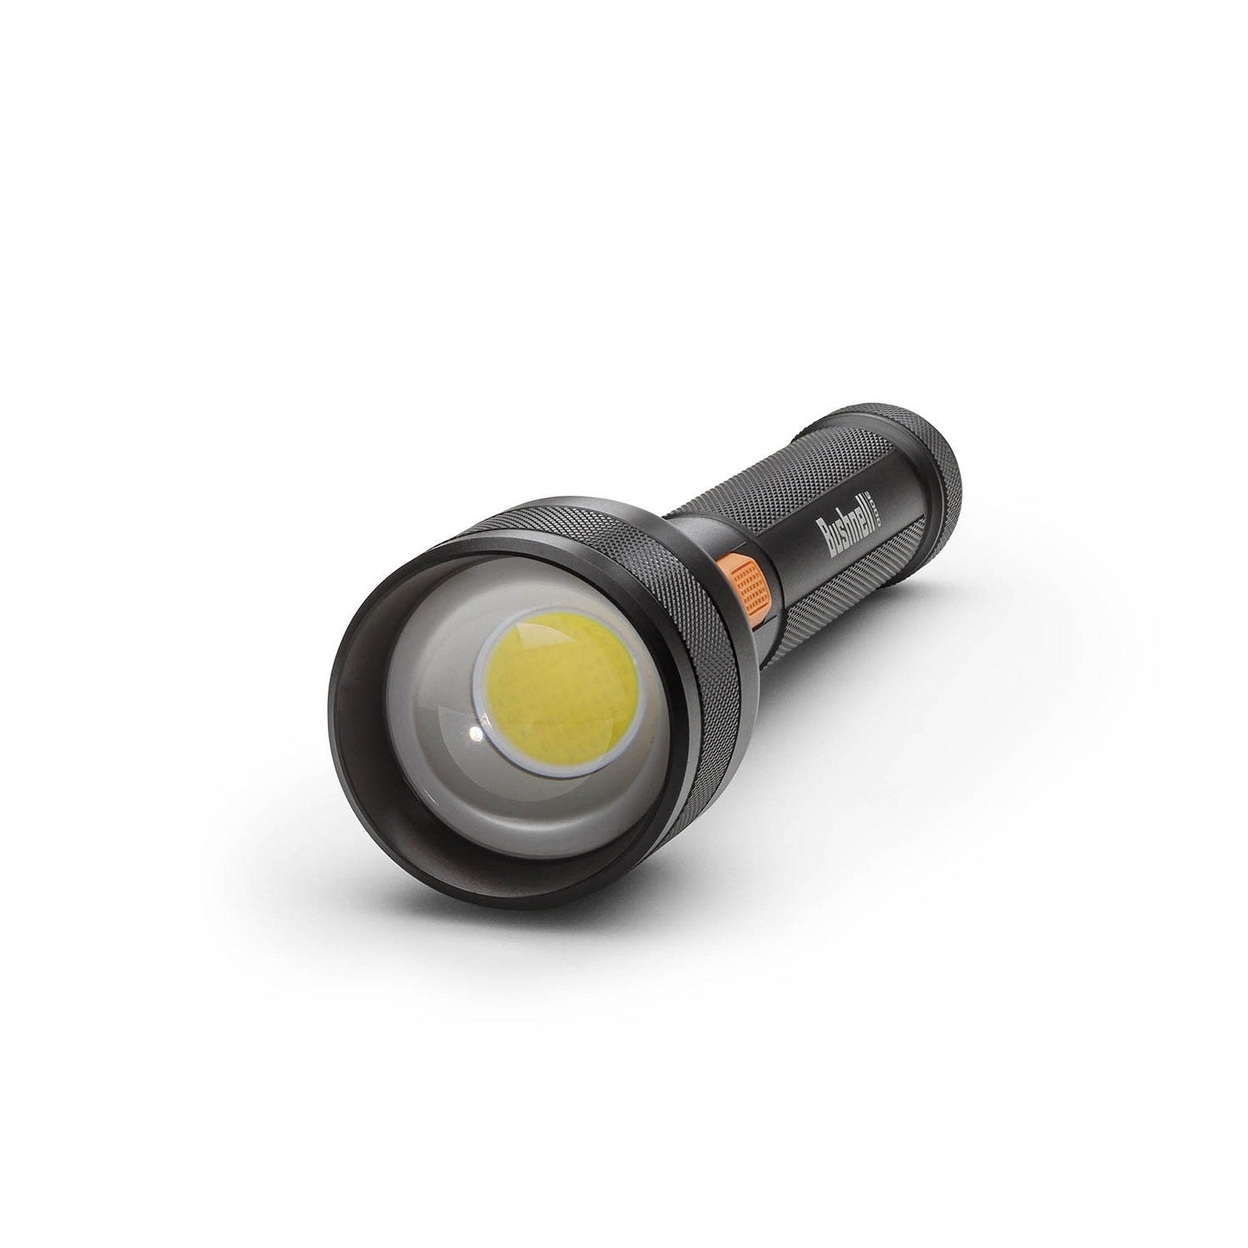 Bushnell 3000 Lumen Rechargeable Focusing Flashlight